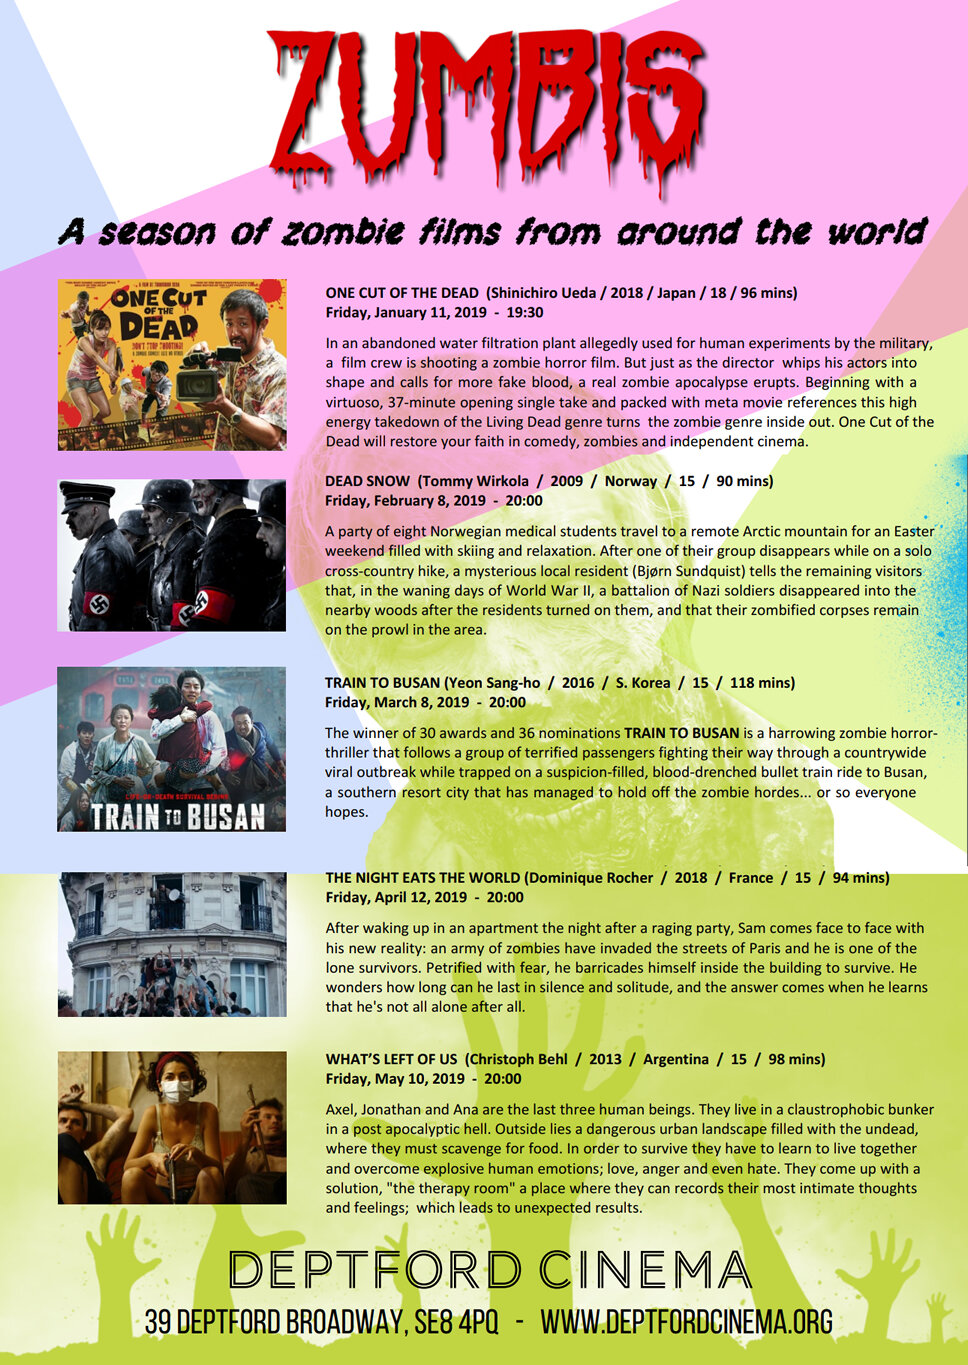 Cartaz de filme de zumbi – Zombies on Broadway